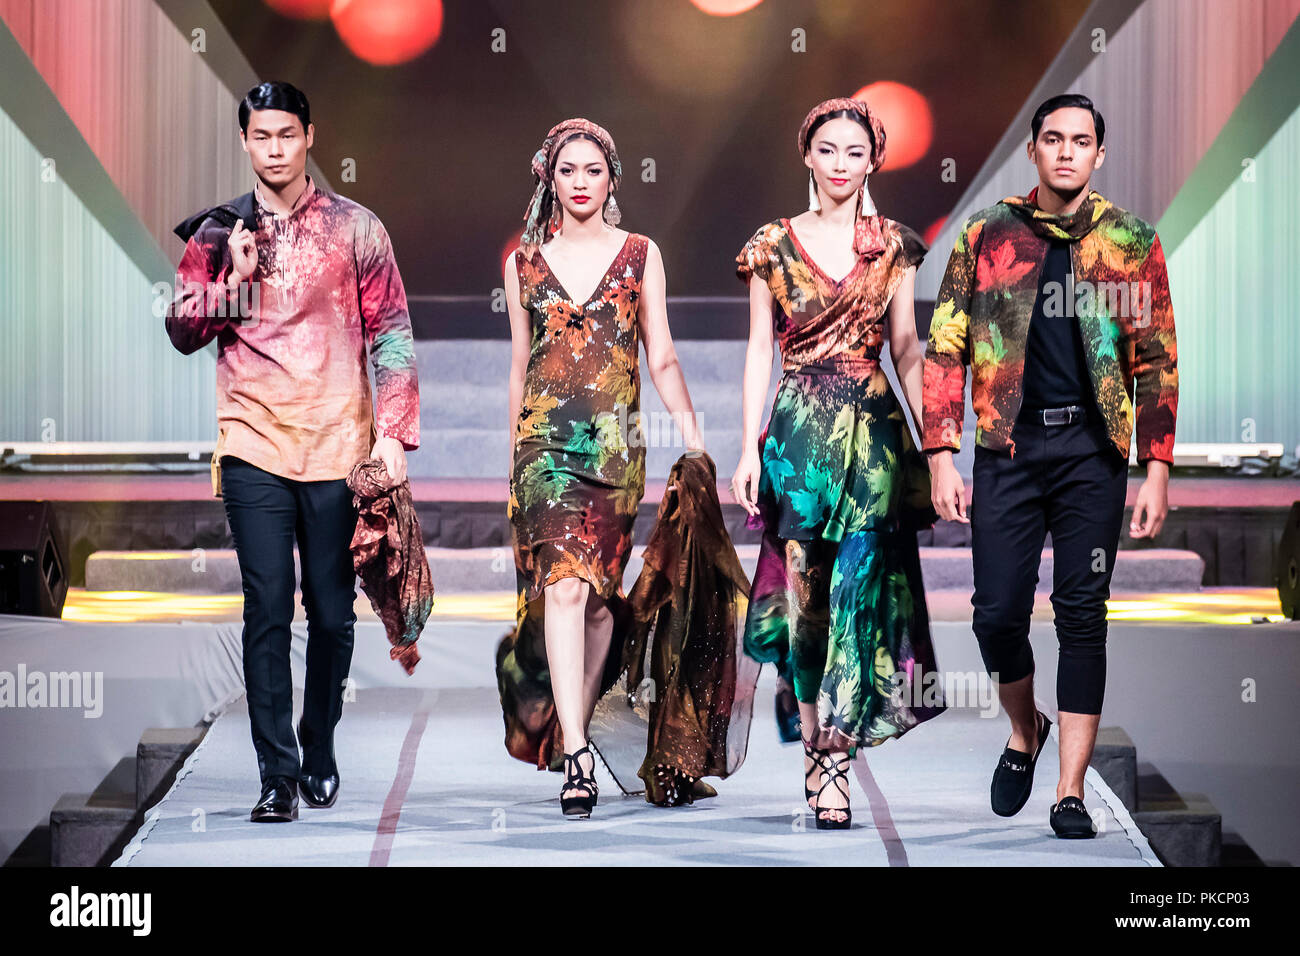 Kuala Lumpur, Malaysia. 9th September, 2018. Malaysian batik fashion competition finals held in Kuala Lumpur, Malaysia on 9th September, 2018. Models  Stock Photo